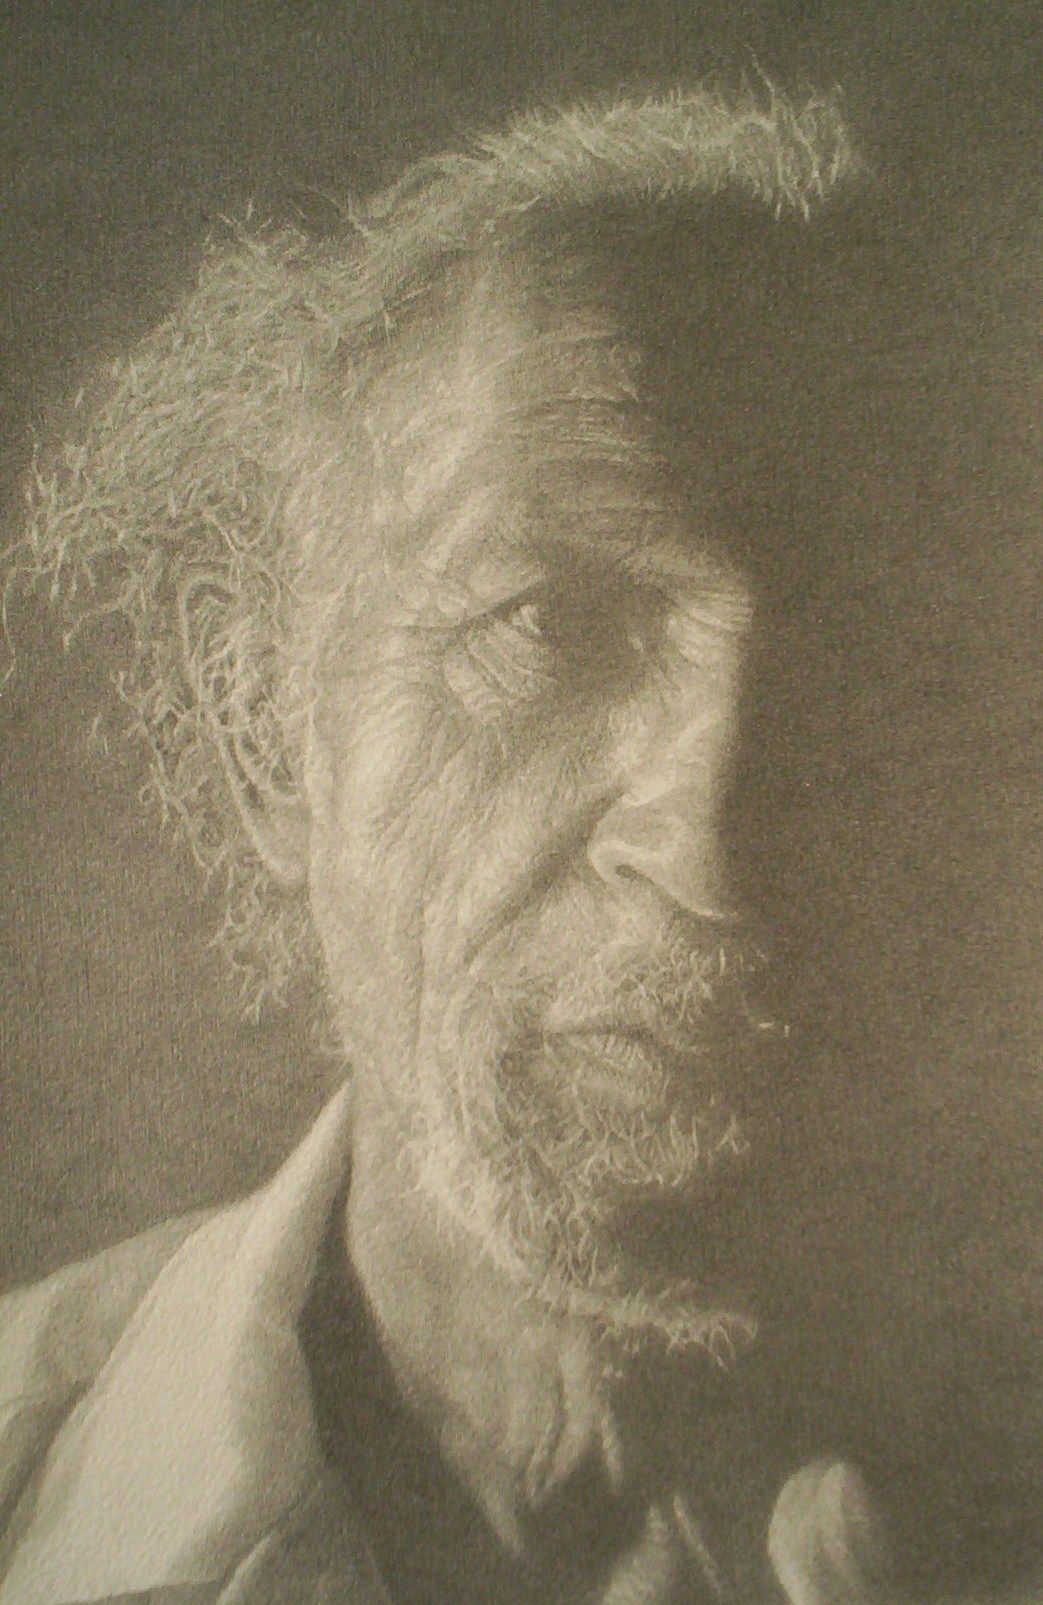   "Roland"    2009 Pencil on wove paper   11 x 16 inches   © Richard Wyatt Jr.     